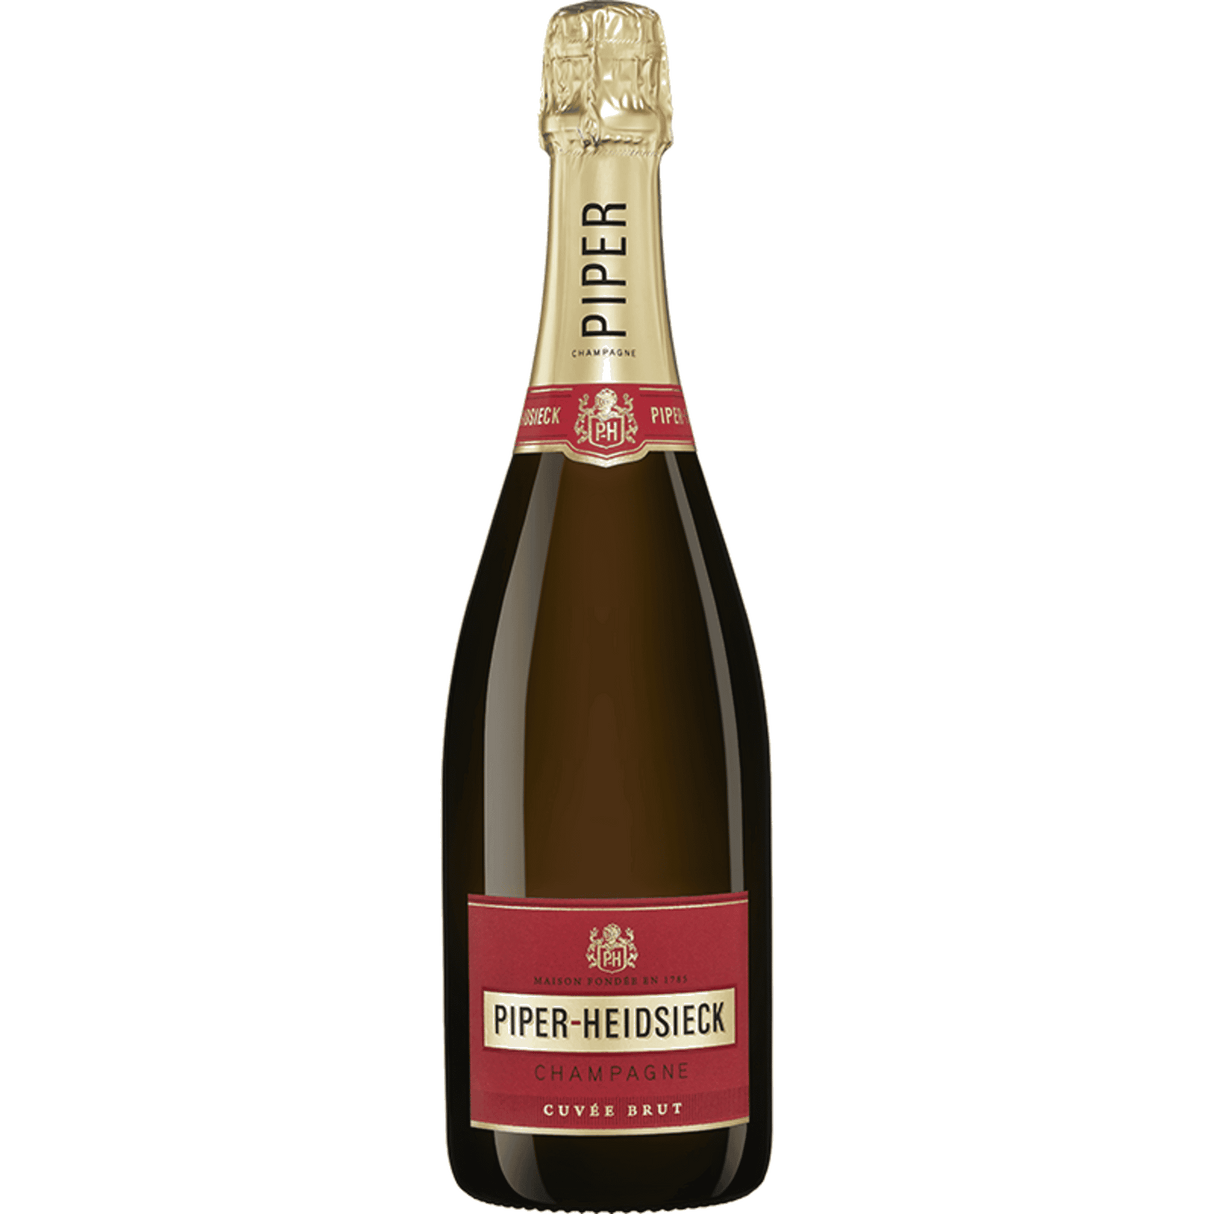 Piper-Heidsieck Cuvee Brut Champagne NV 750ml